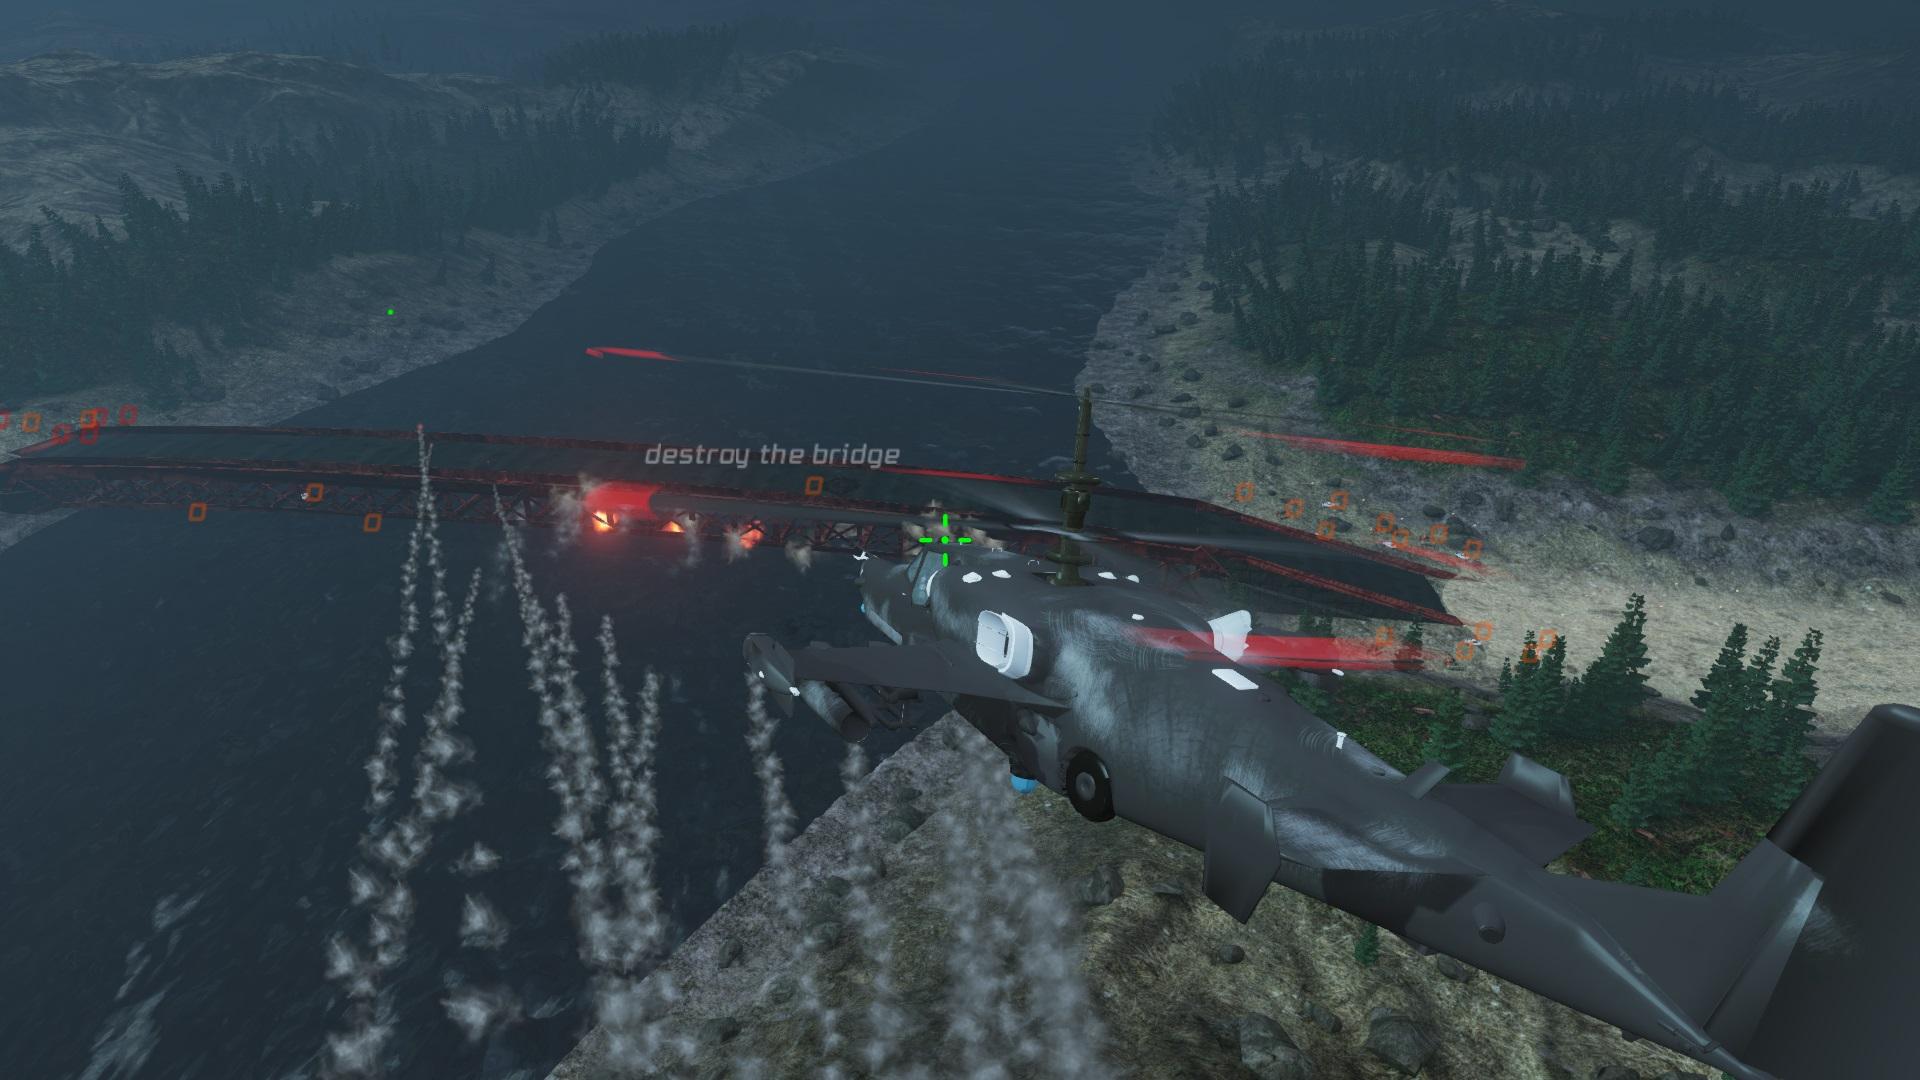 Screenshot №7 from game Aerial Destruction